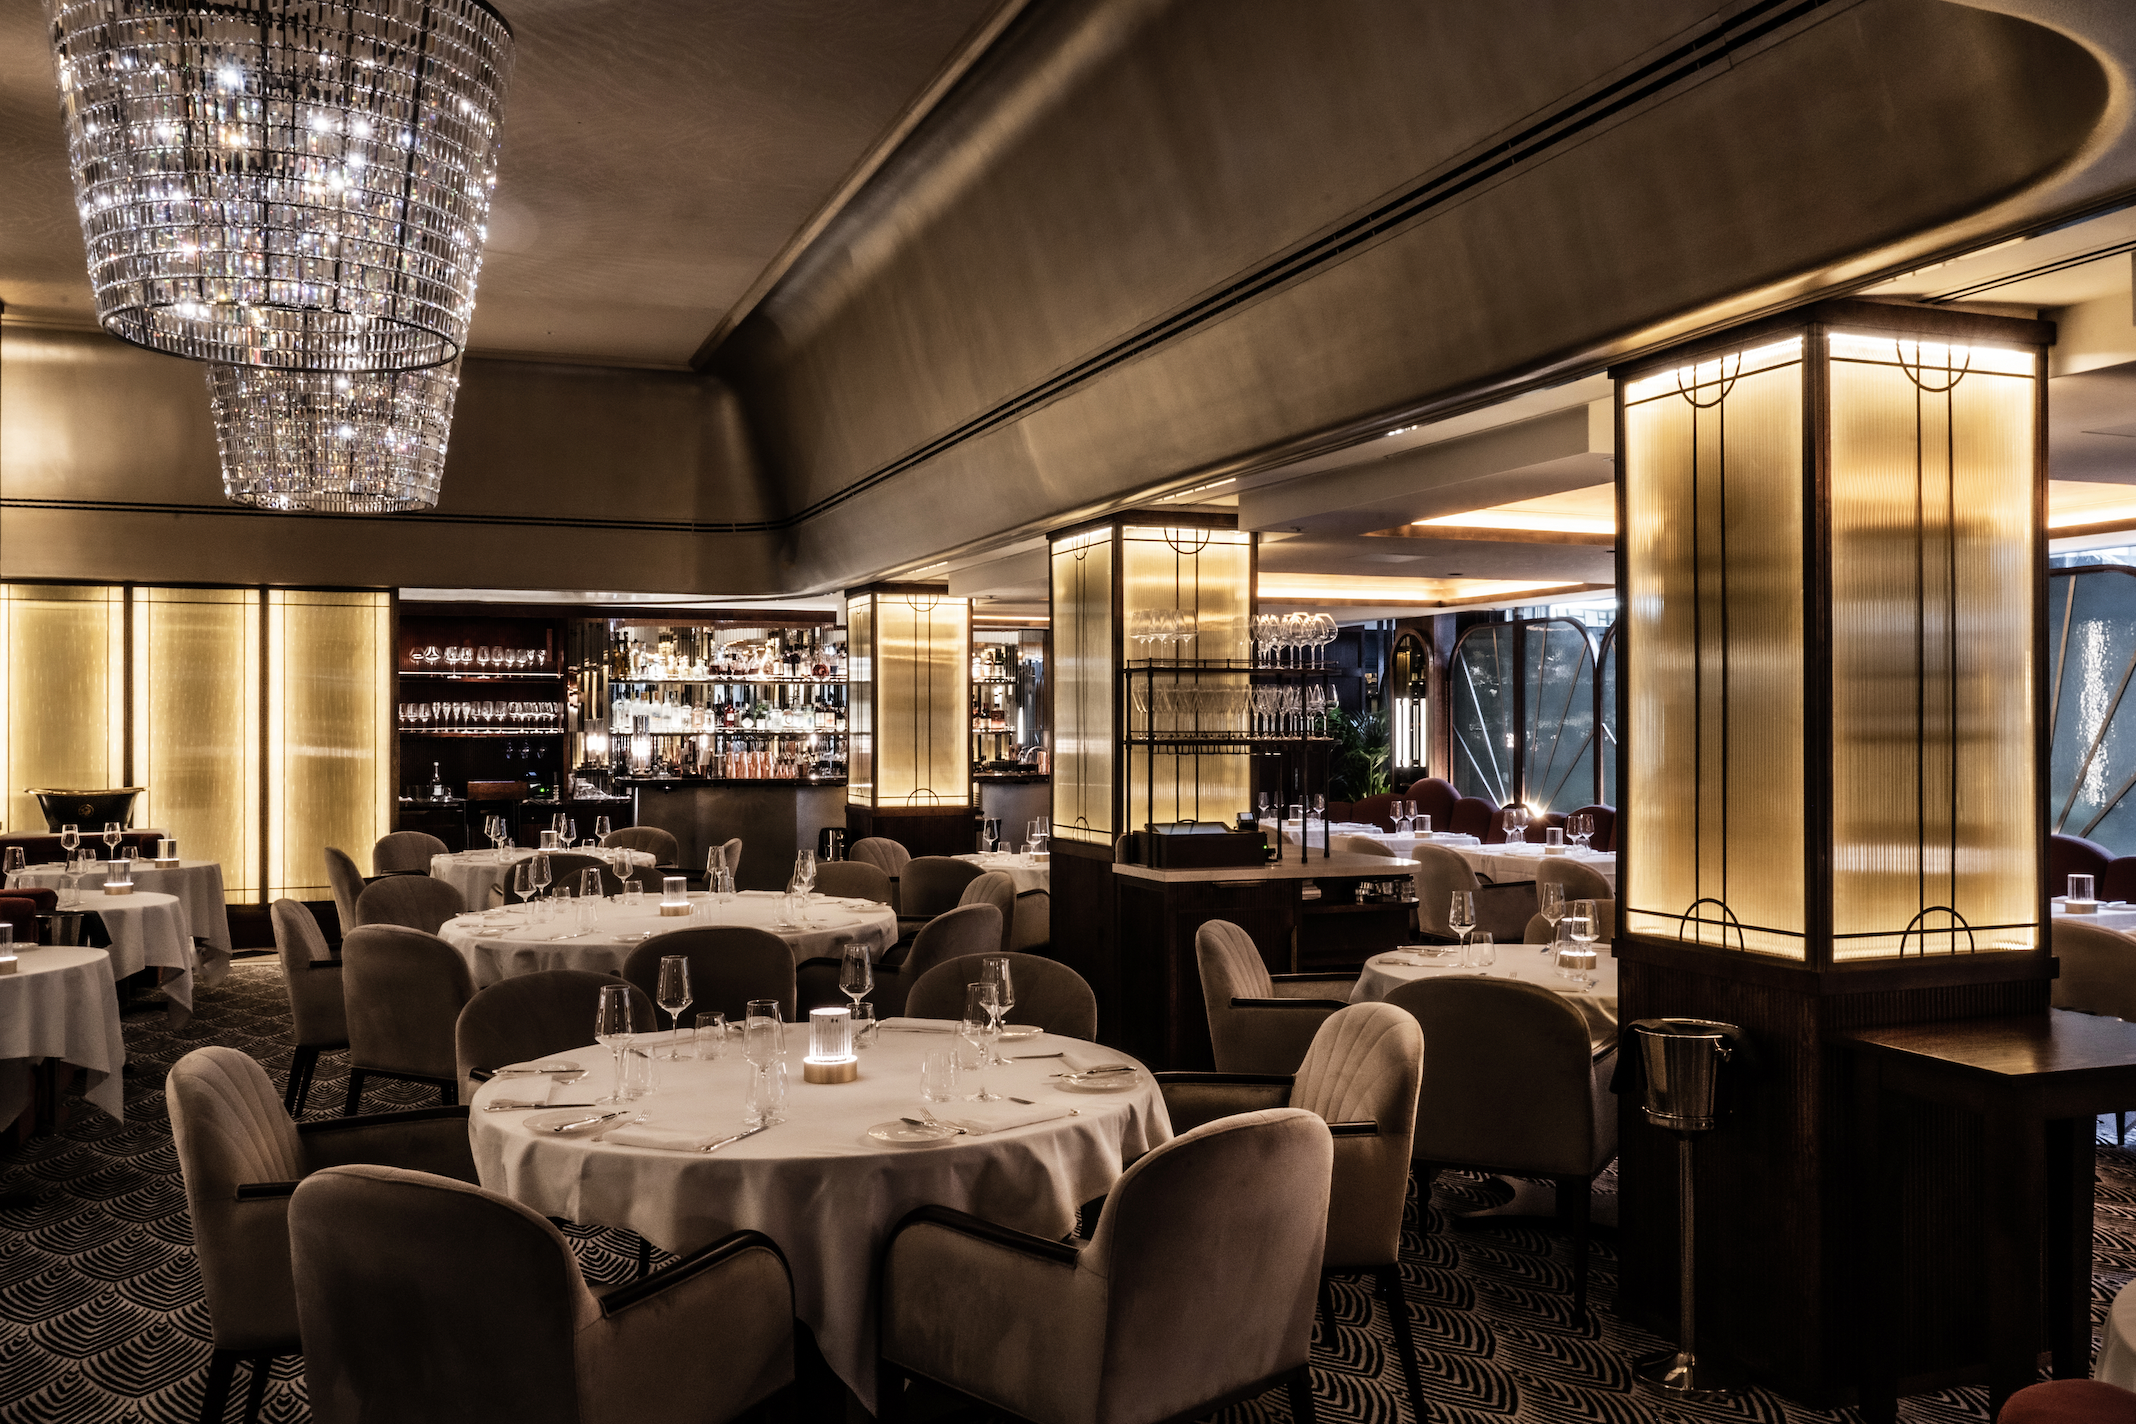 Review: Savoy restaurant in Covent Garden, London